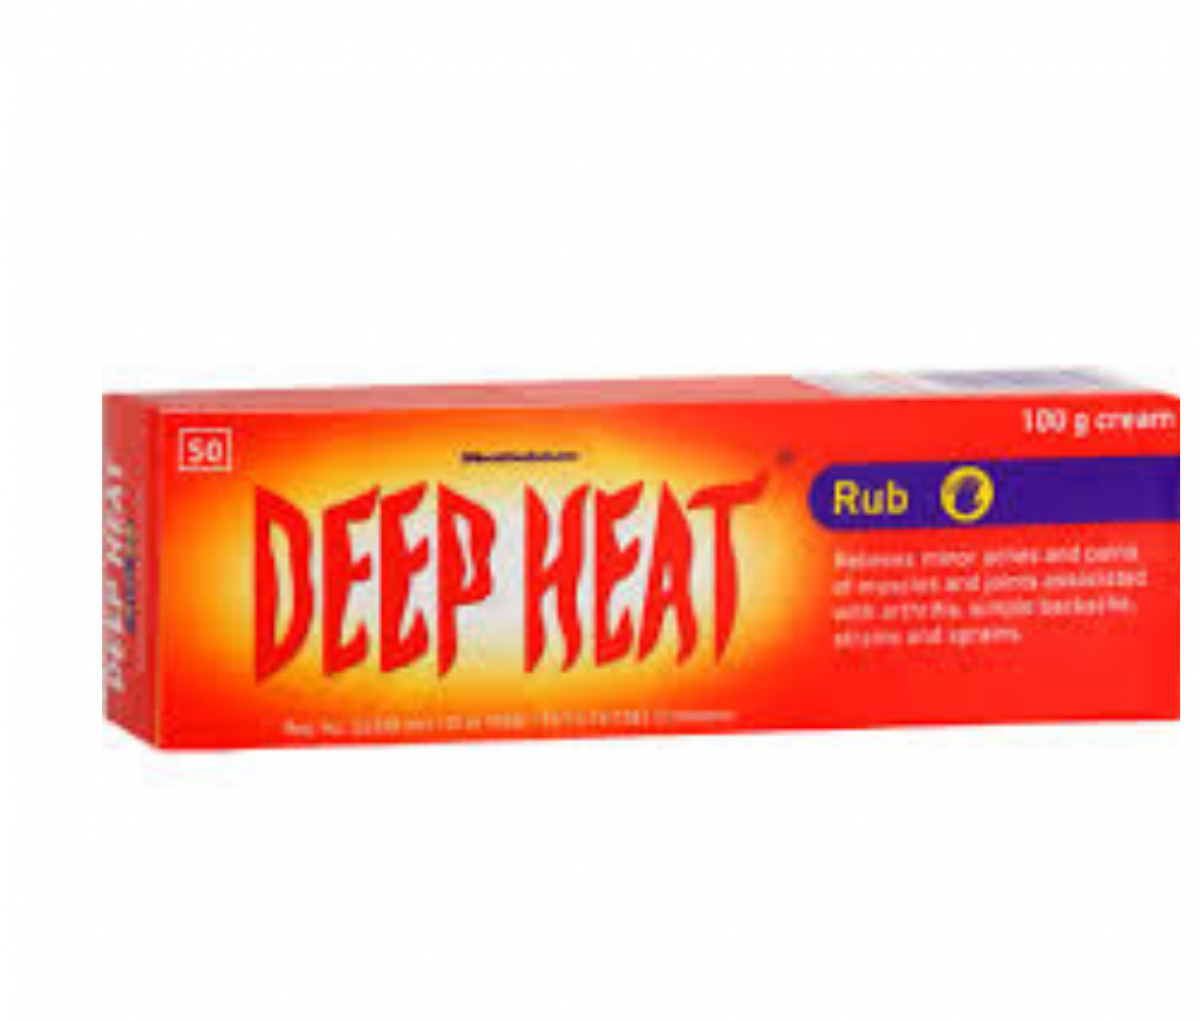 Deep Heat Rub 100g